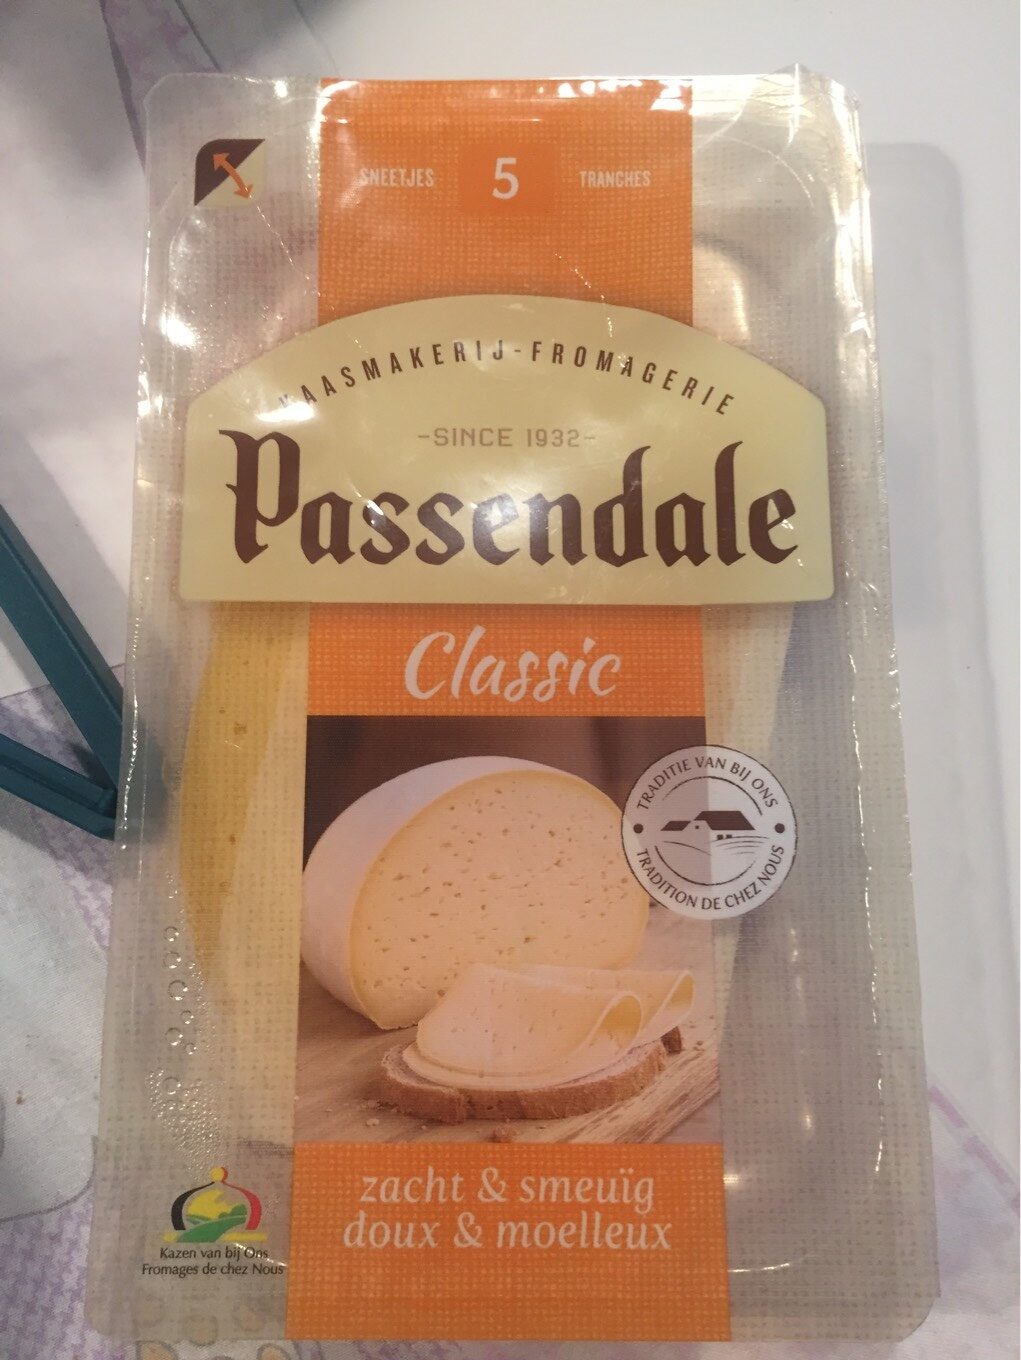 Passendale classic - Ingredients